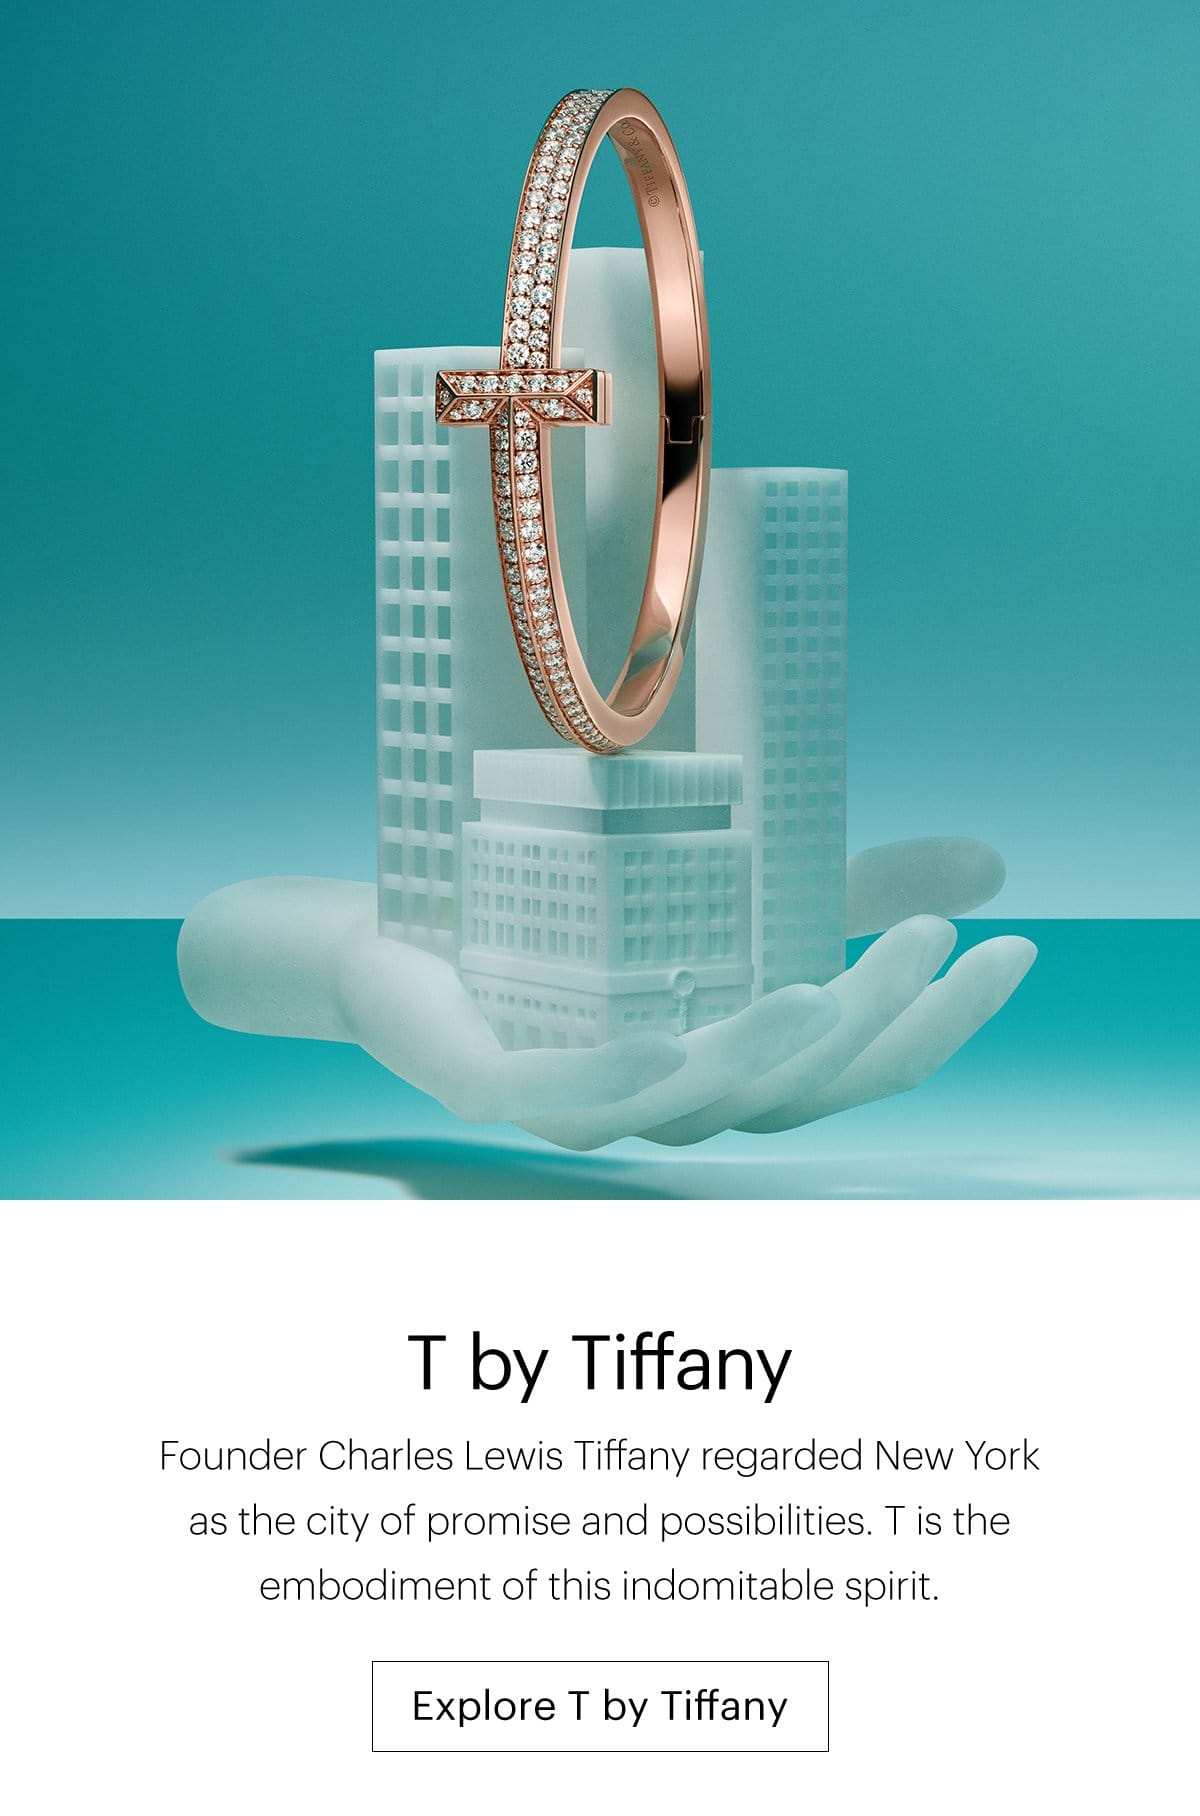 Explore T by Tiffany